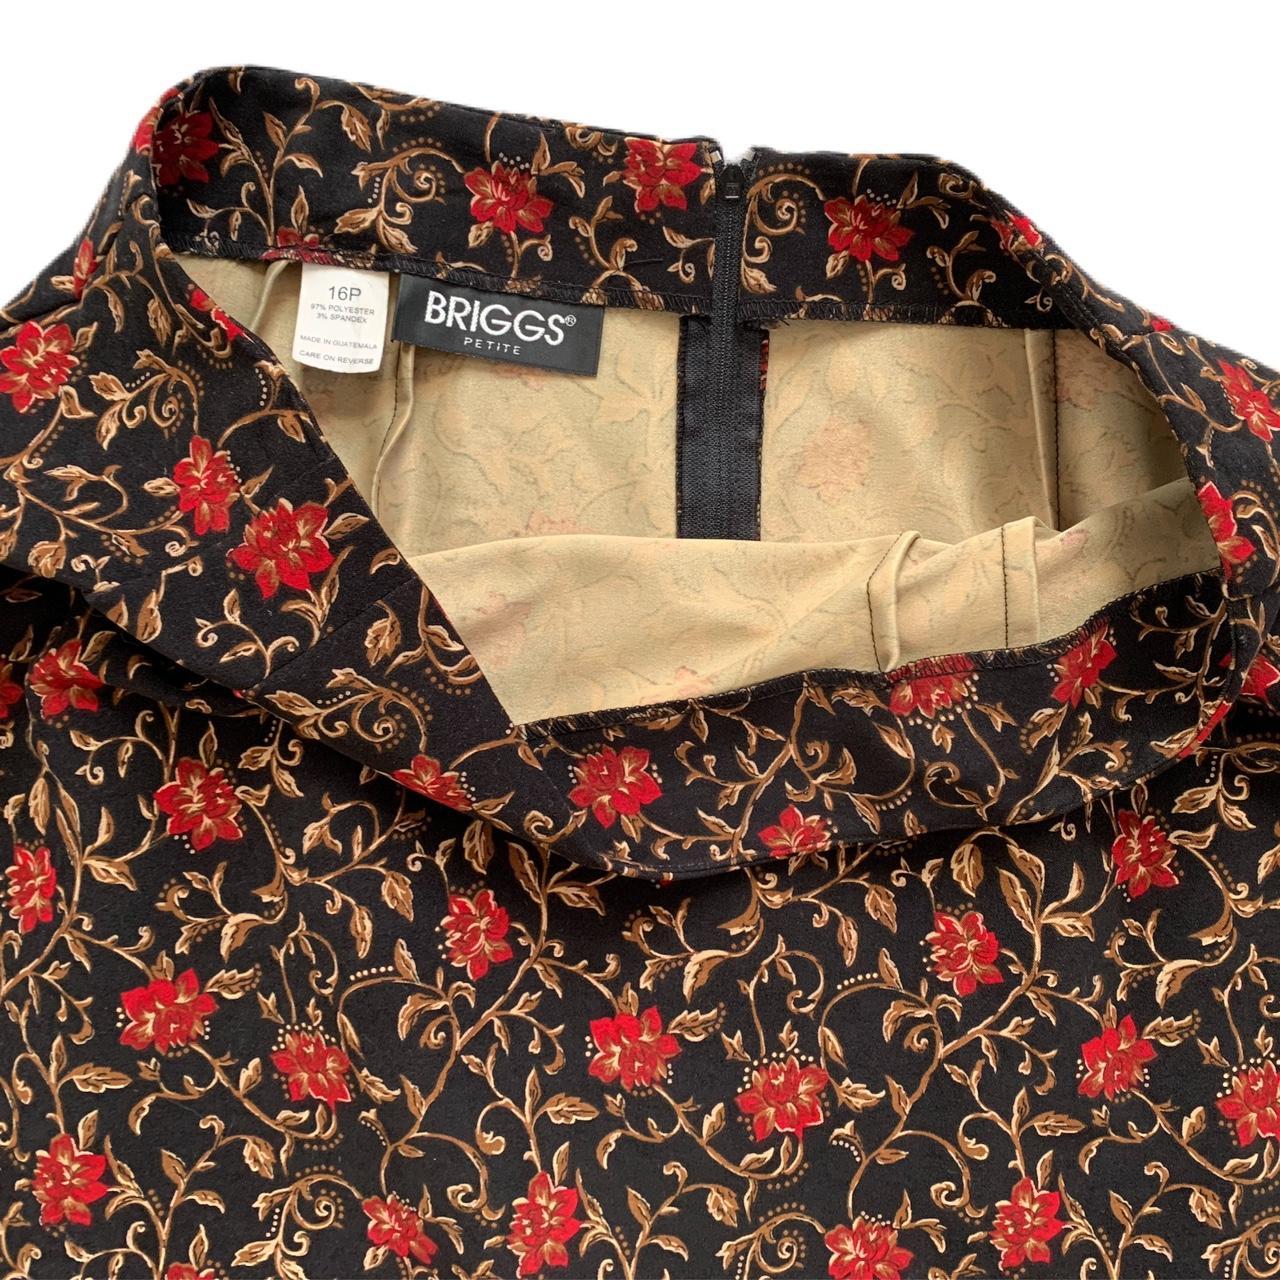 Product Image 3 - Vintage boho style floral patterned